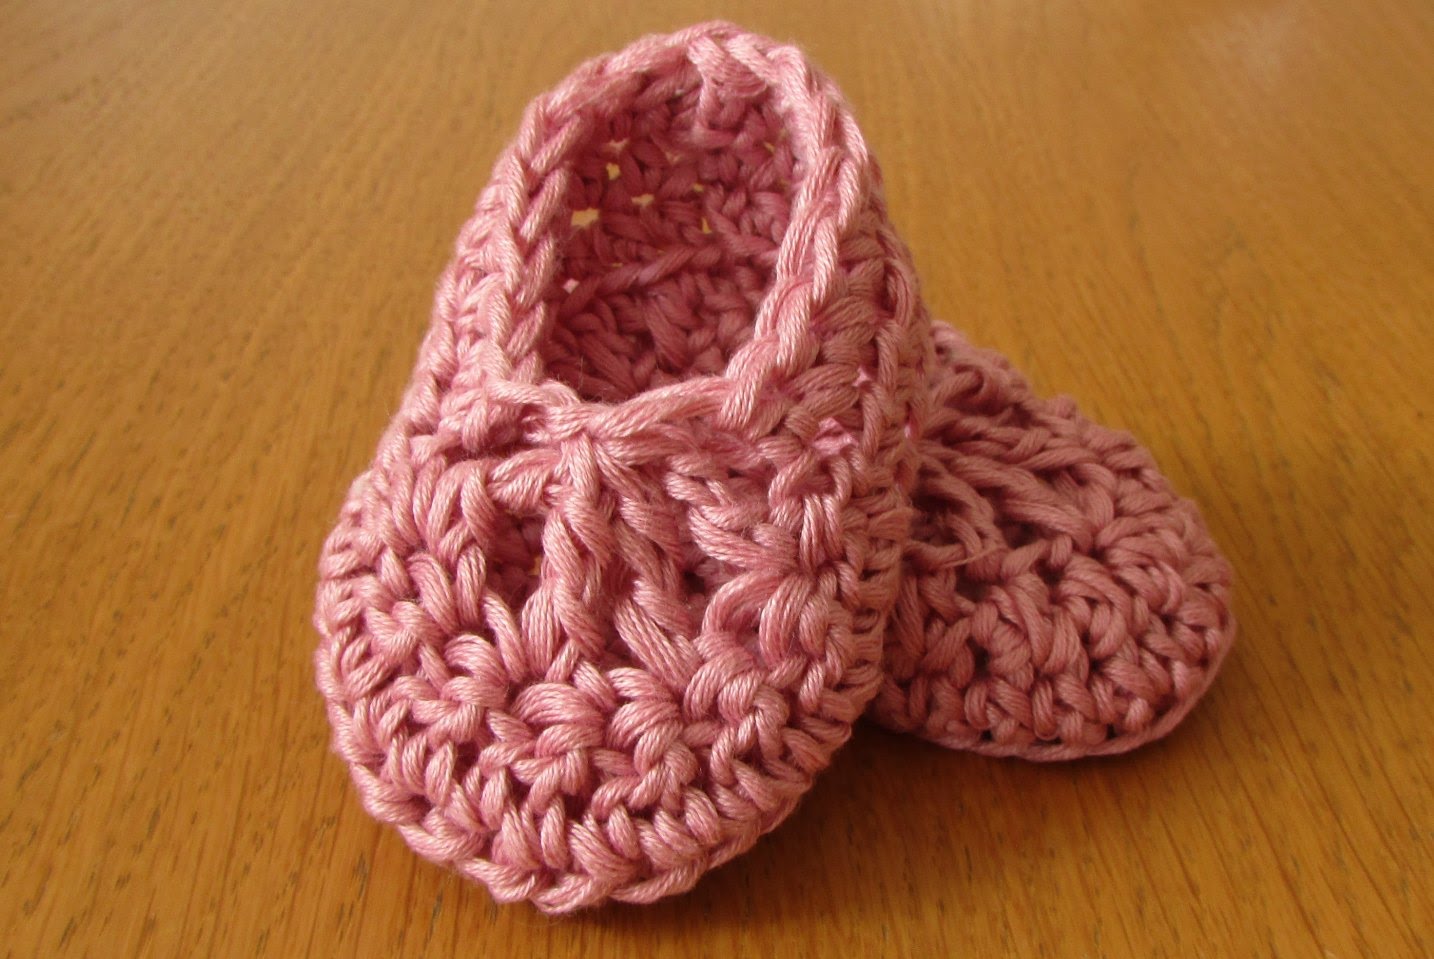 crochet baby shoes easy crochet baby ballet slippers - dainty crochet baby booties / shoes - avvoaea